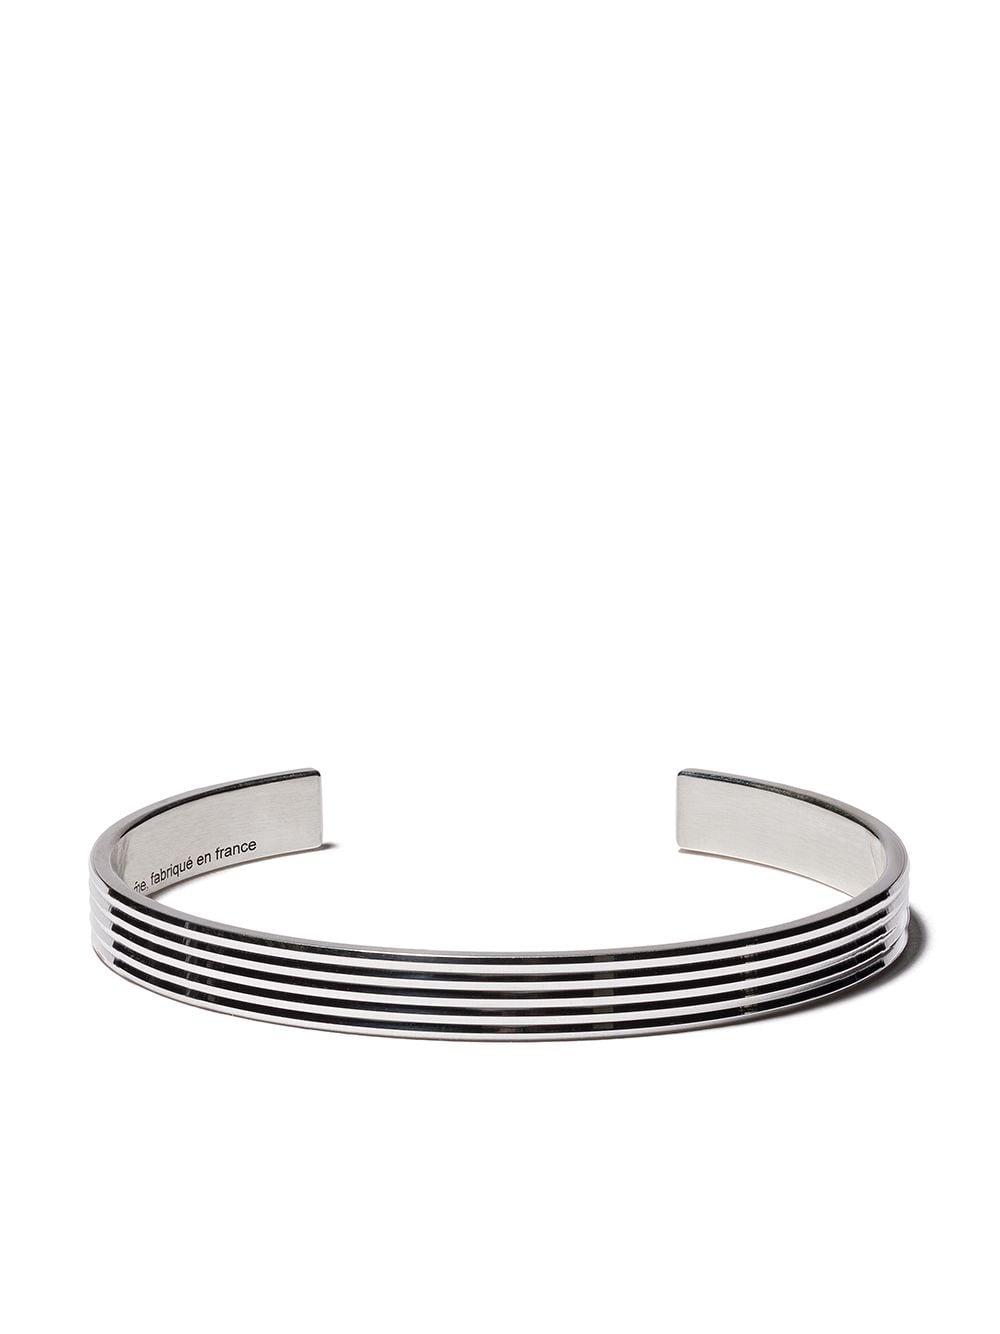 Image 1 of Le Gramme enamelled cuff bracelet